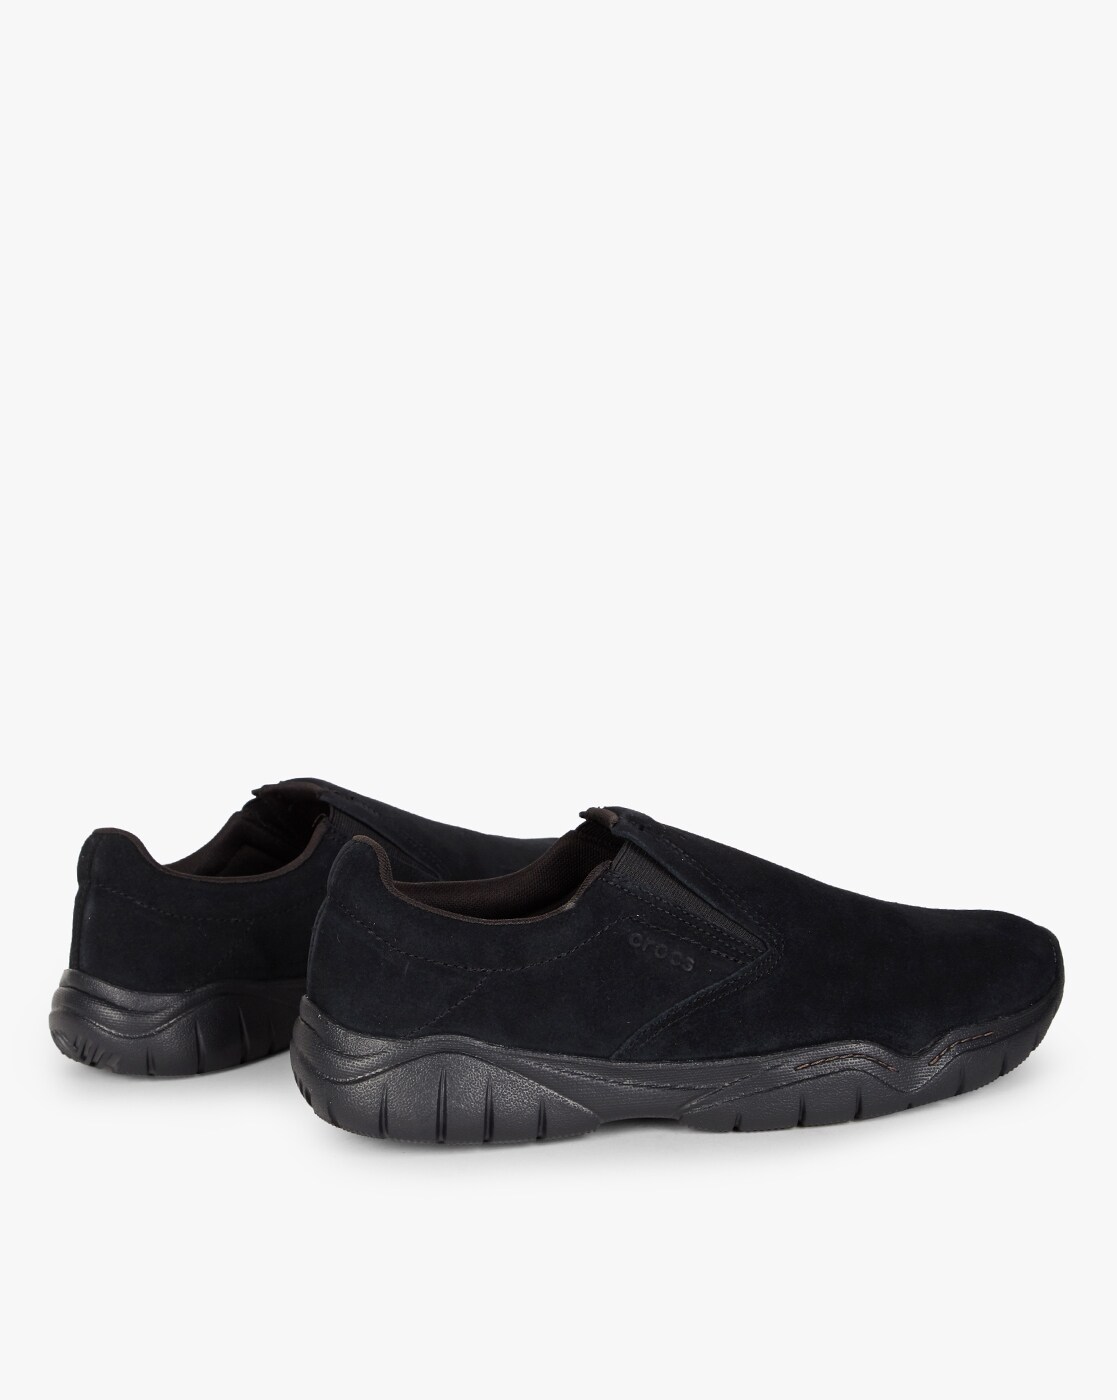 black suede slip on shoes